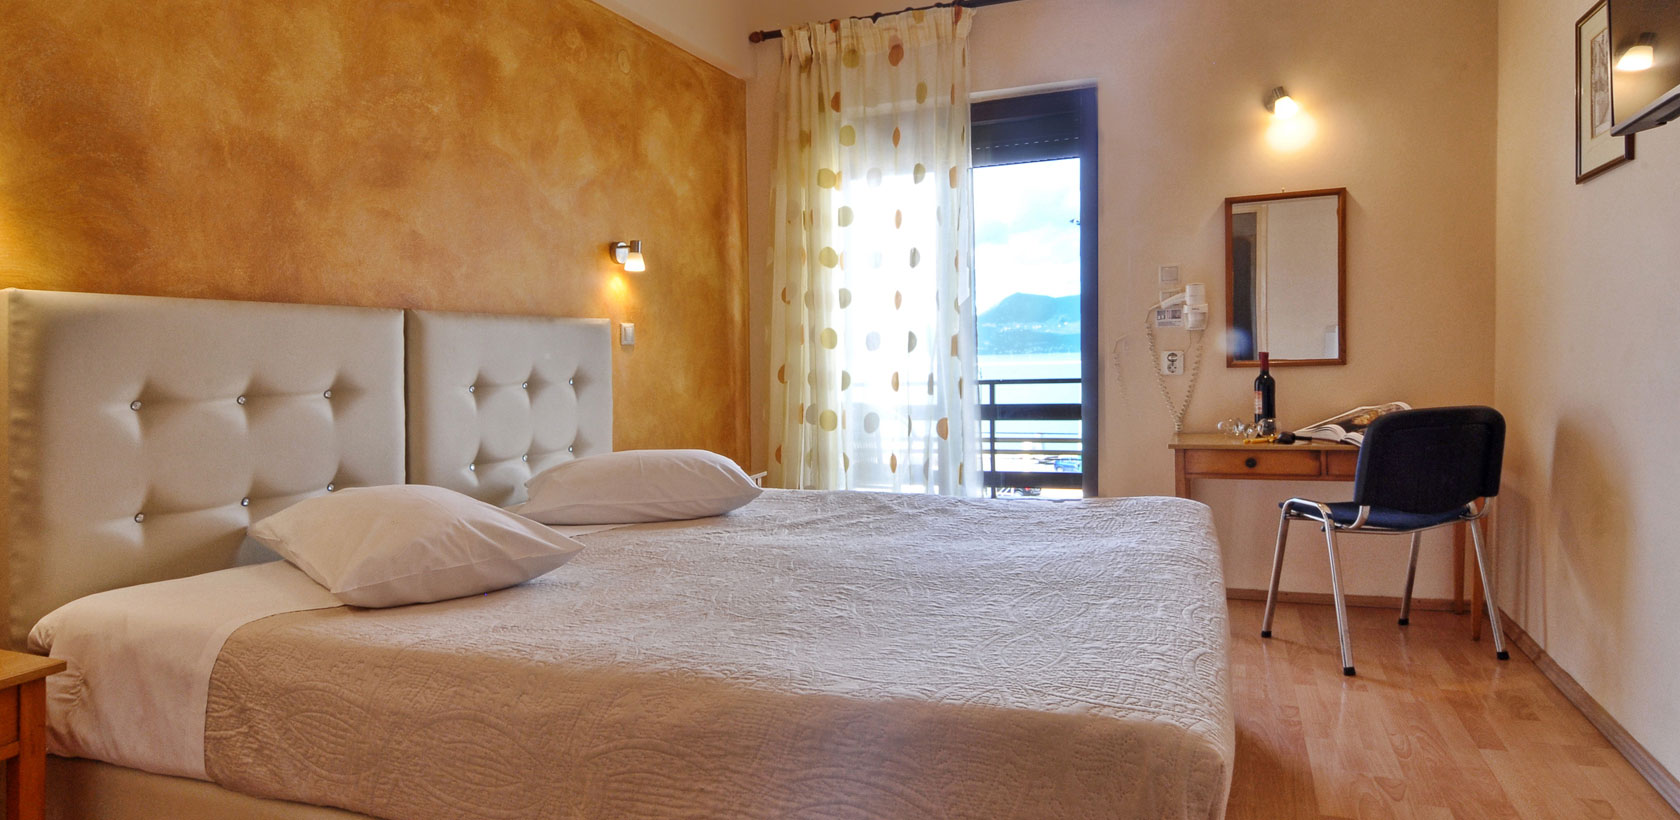 Corfu Accommodation at Atlantis Hotel in Corfu Town